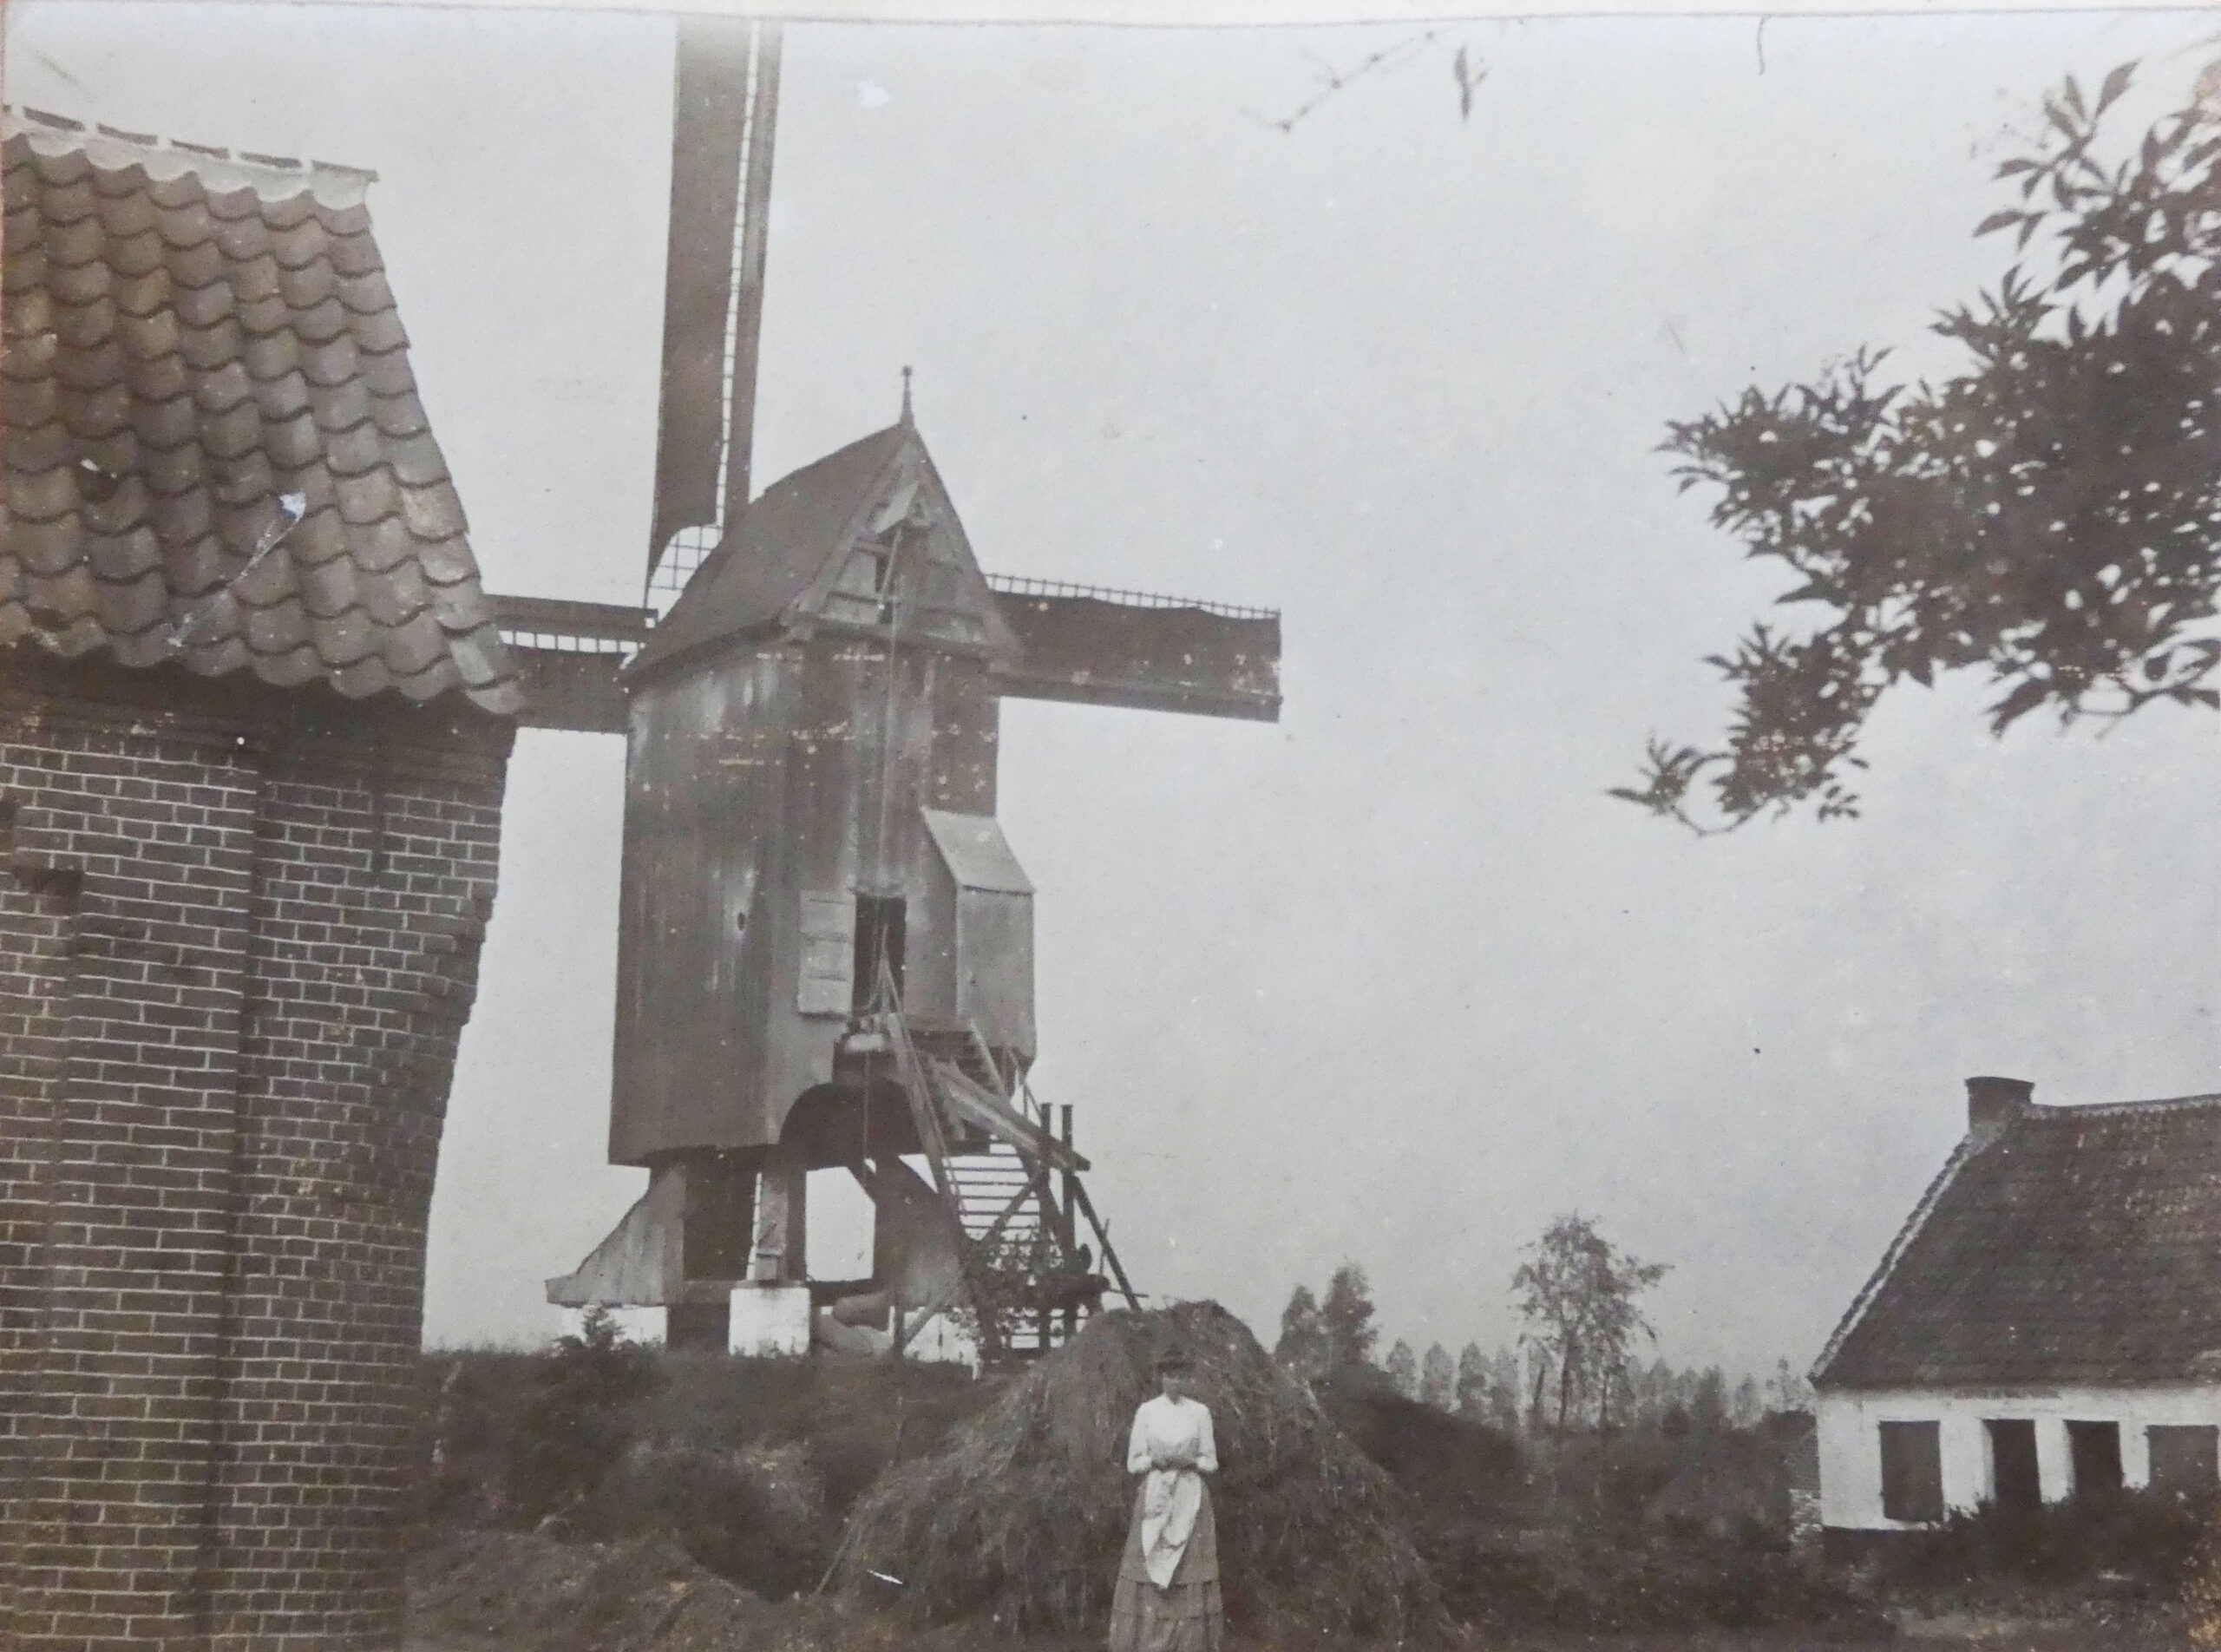 Oude windmolen